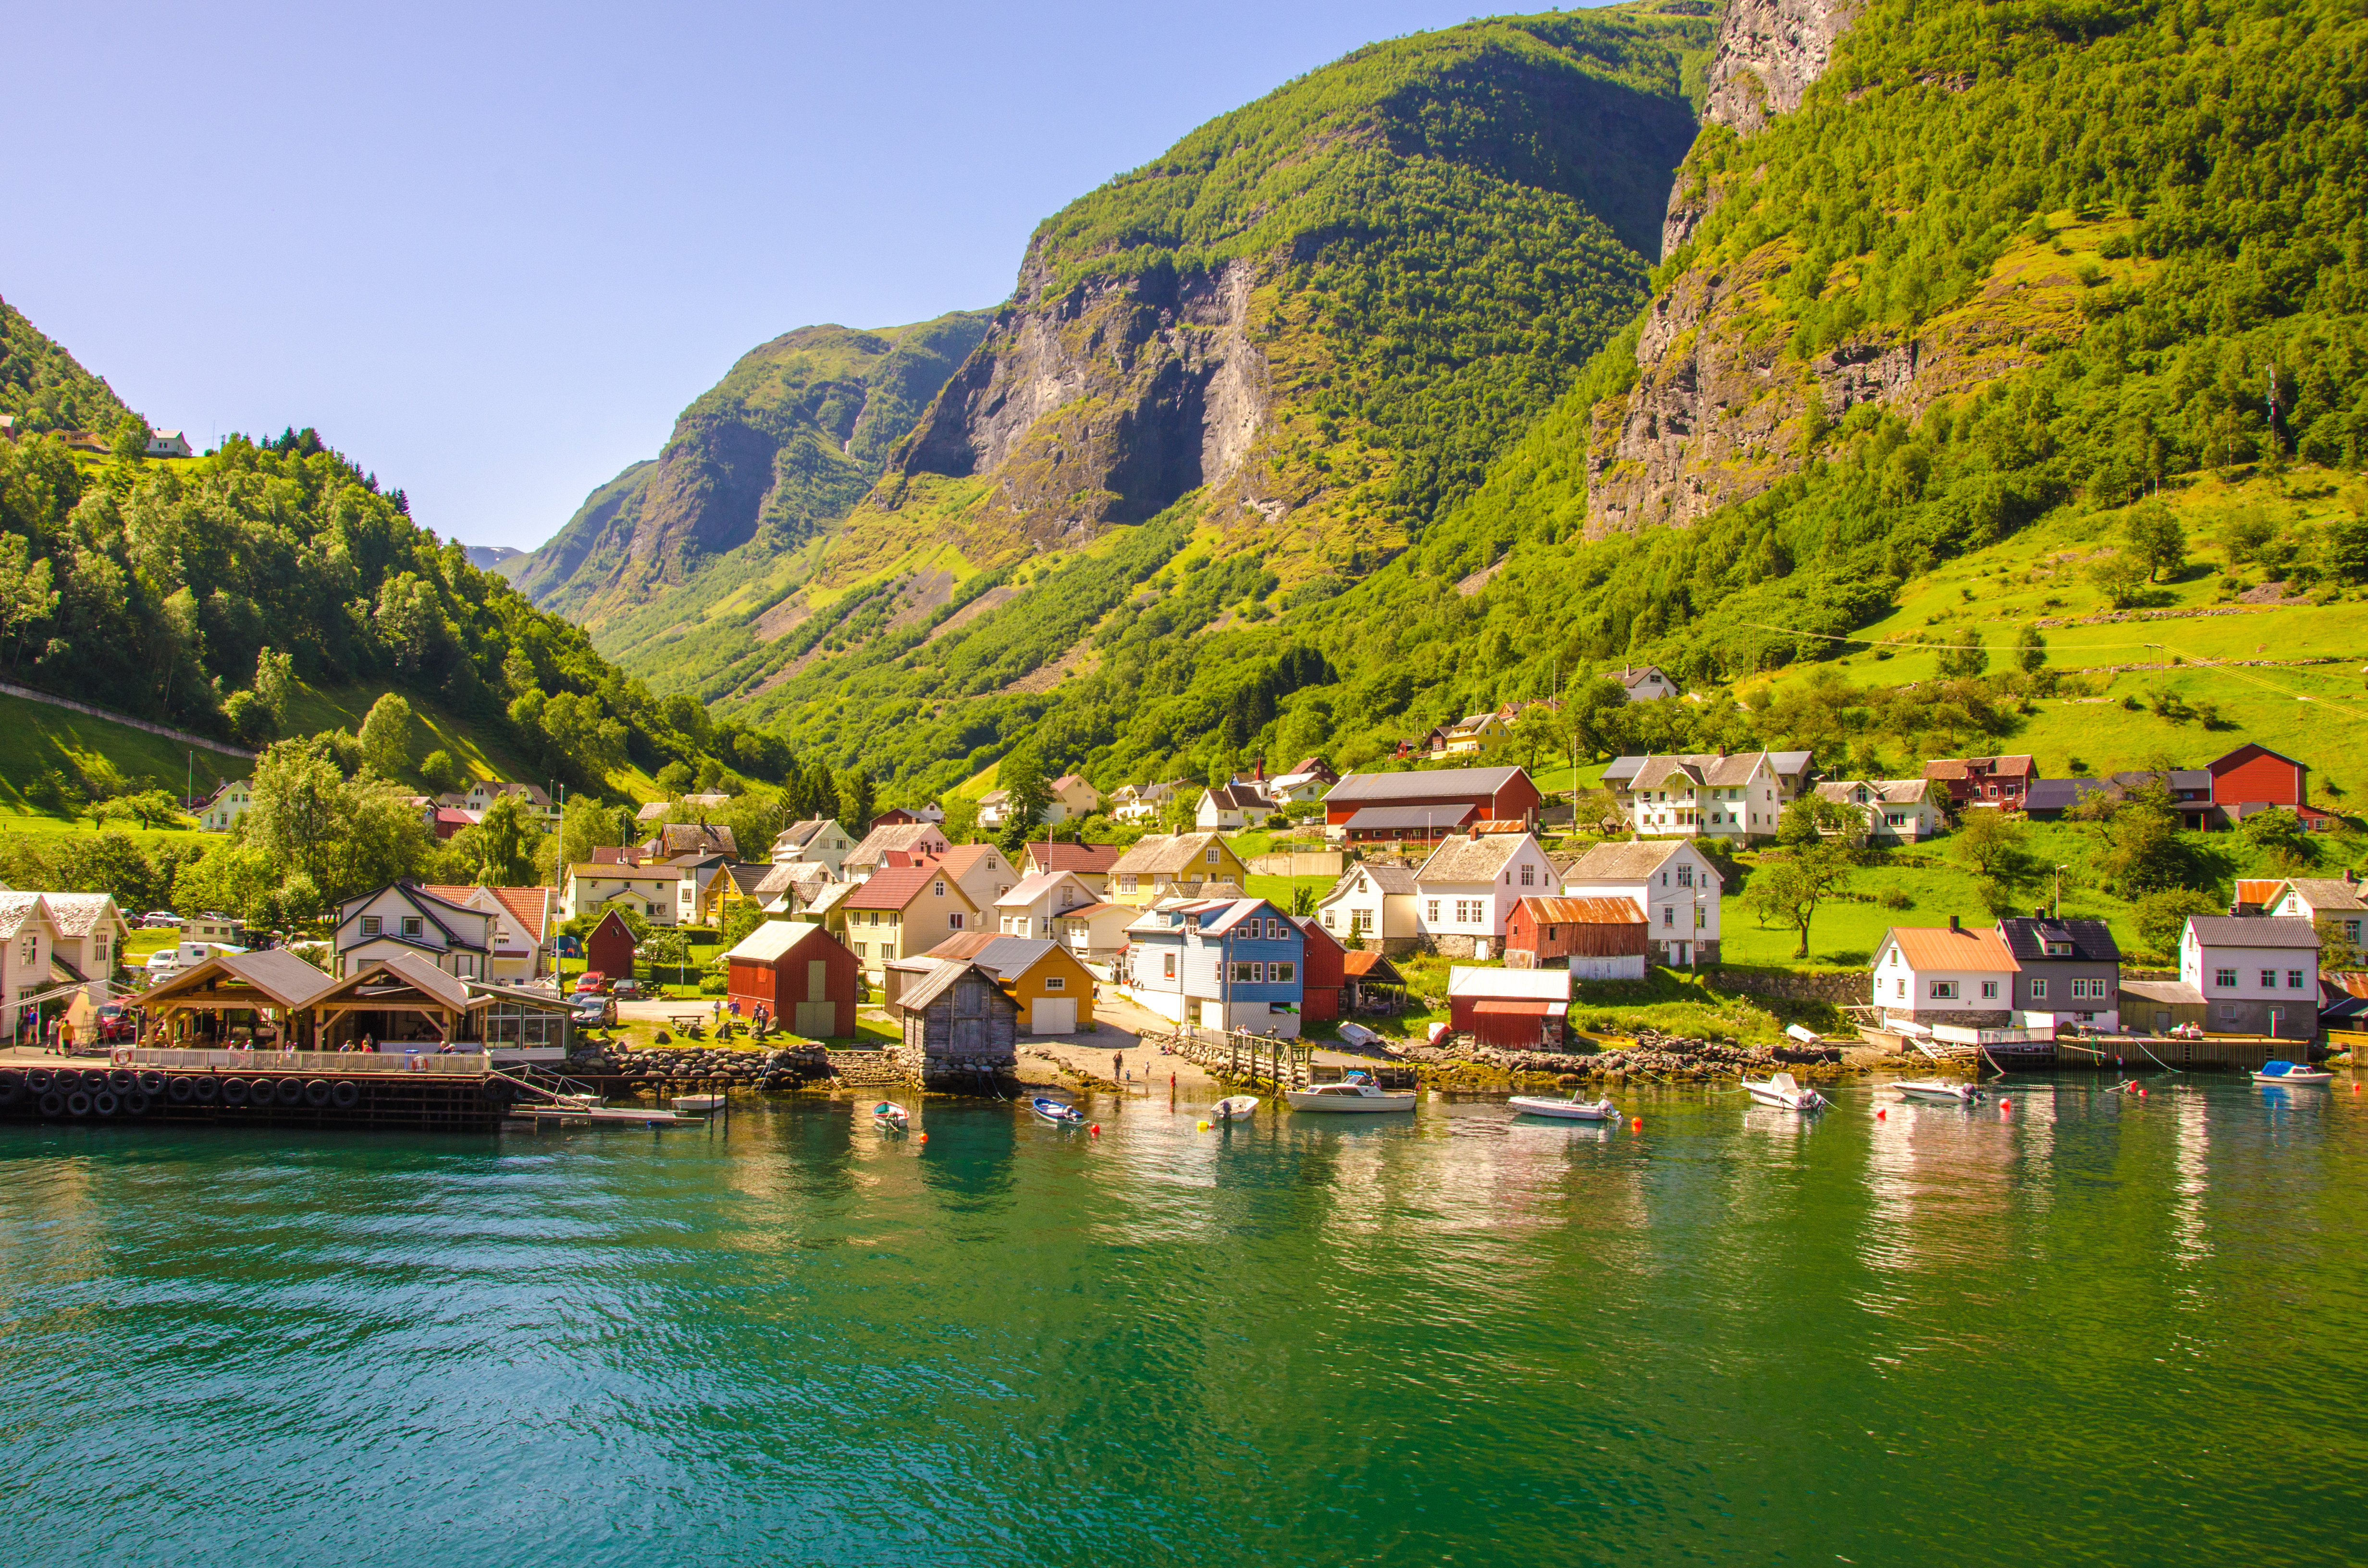 saga cruise norway's ancient fjords